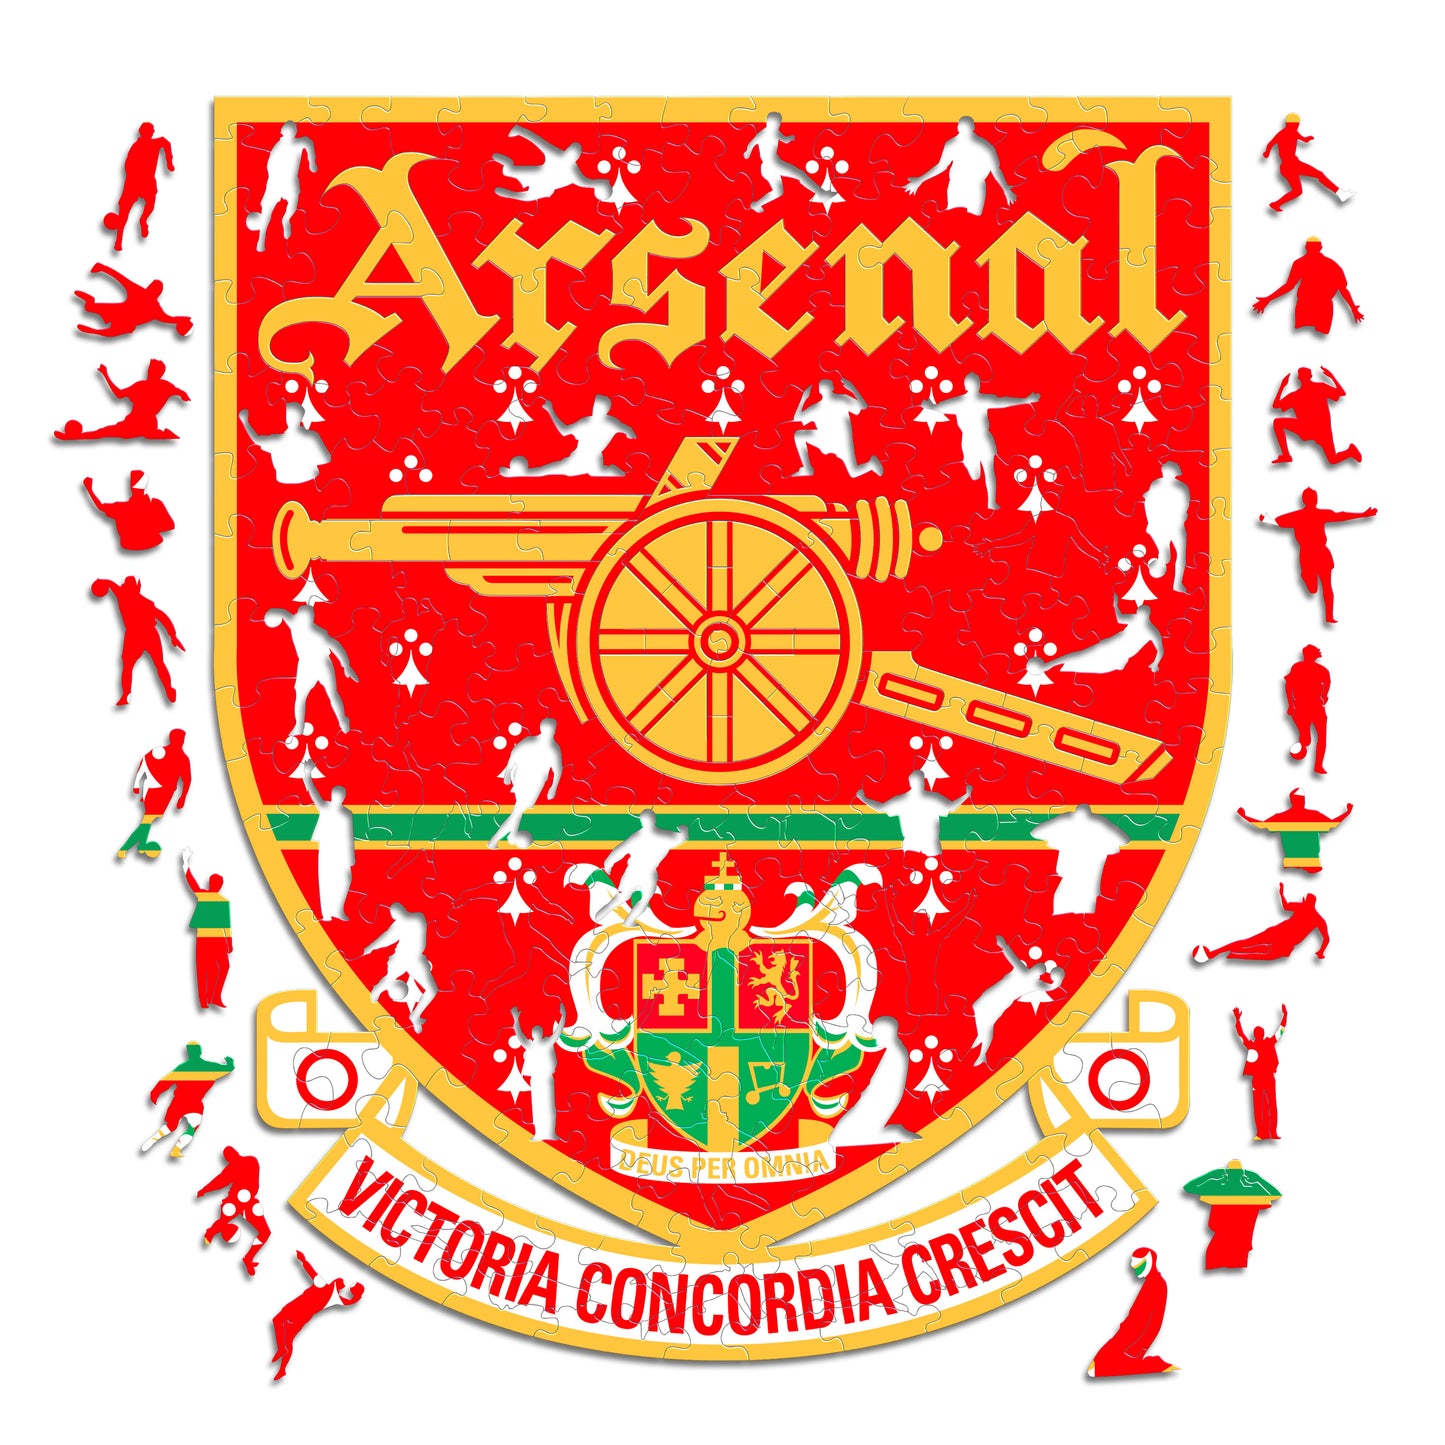 2 PACK Arsenal FC® Crest + Retro Crest